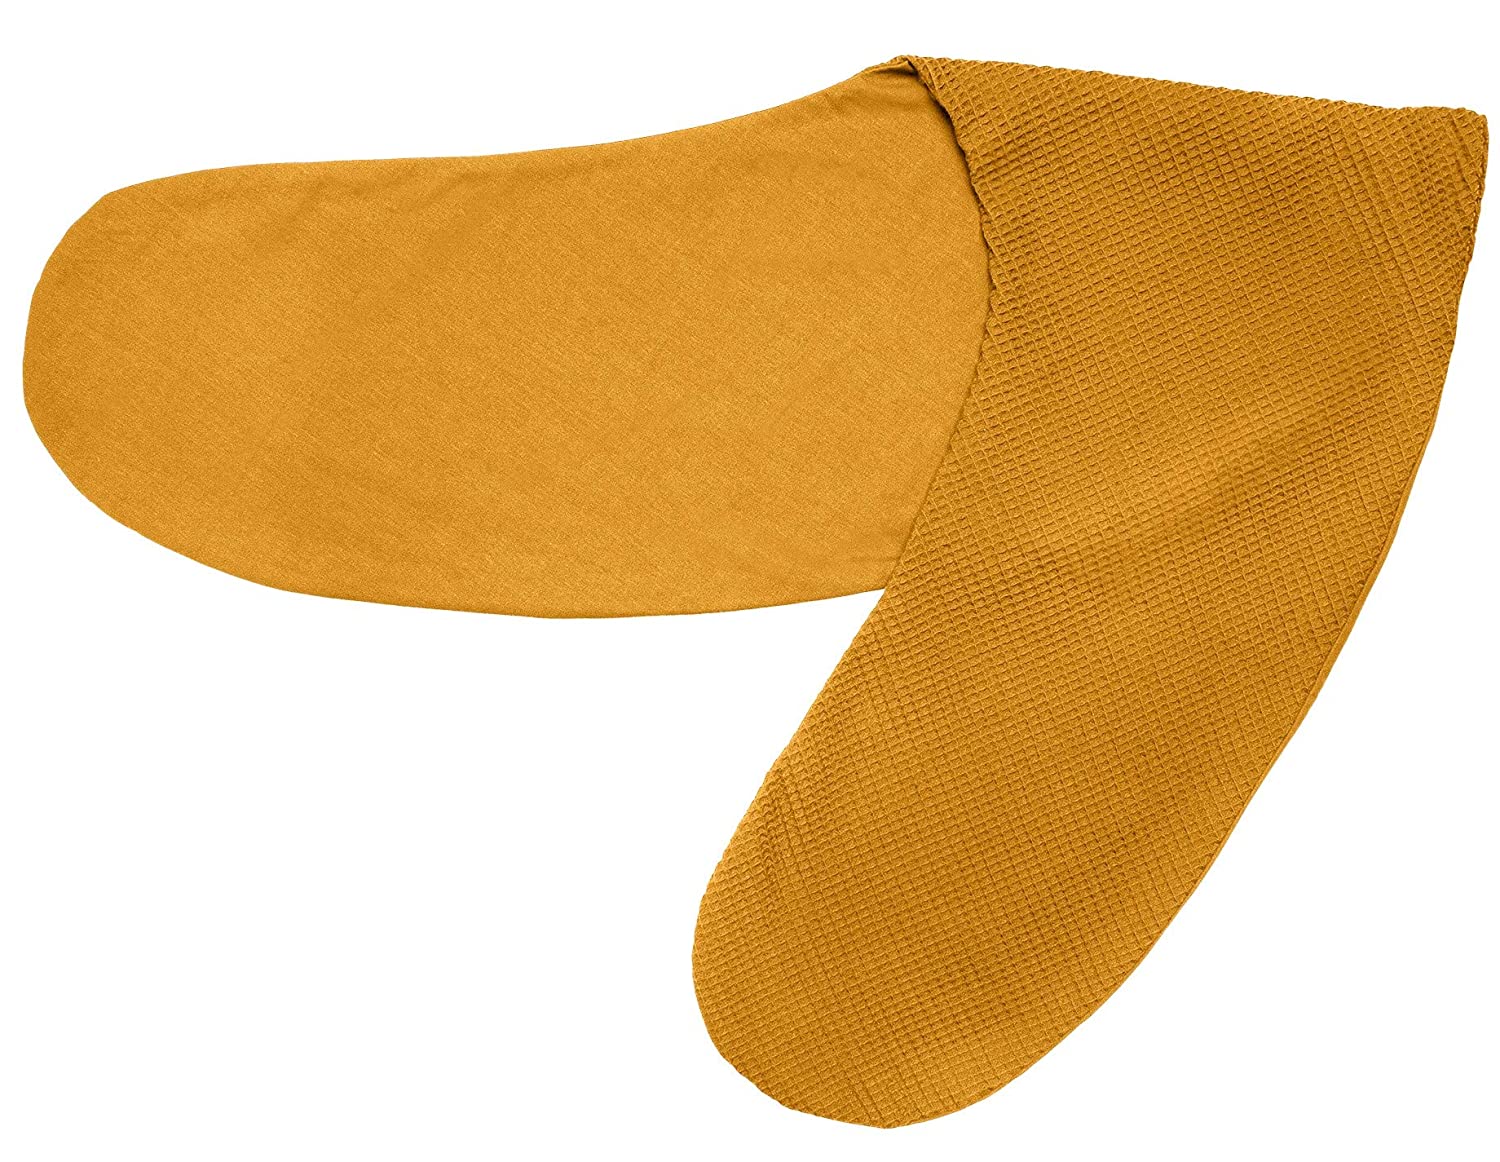 Ideenreich Ideenreich 2462 Nursing Pillow Cover 190 cm Mustard Yellow